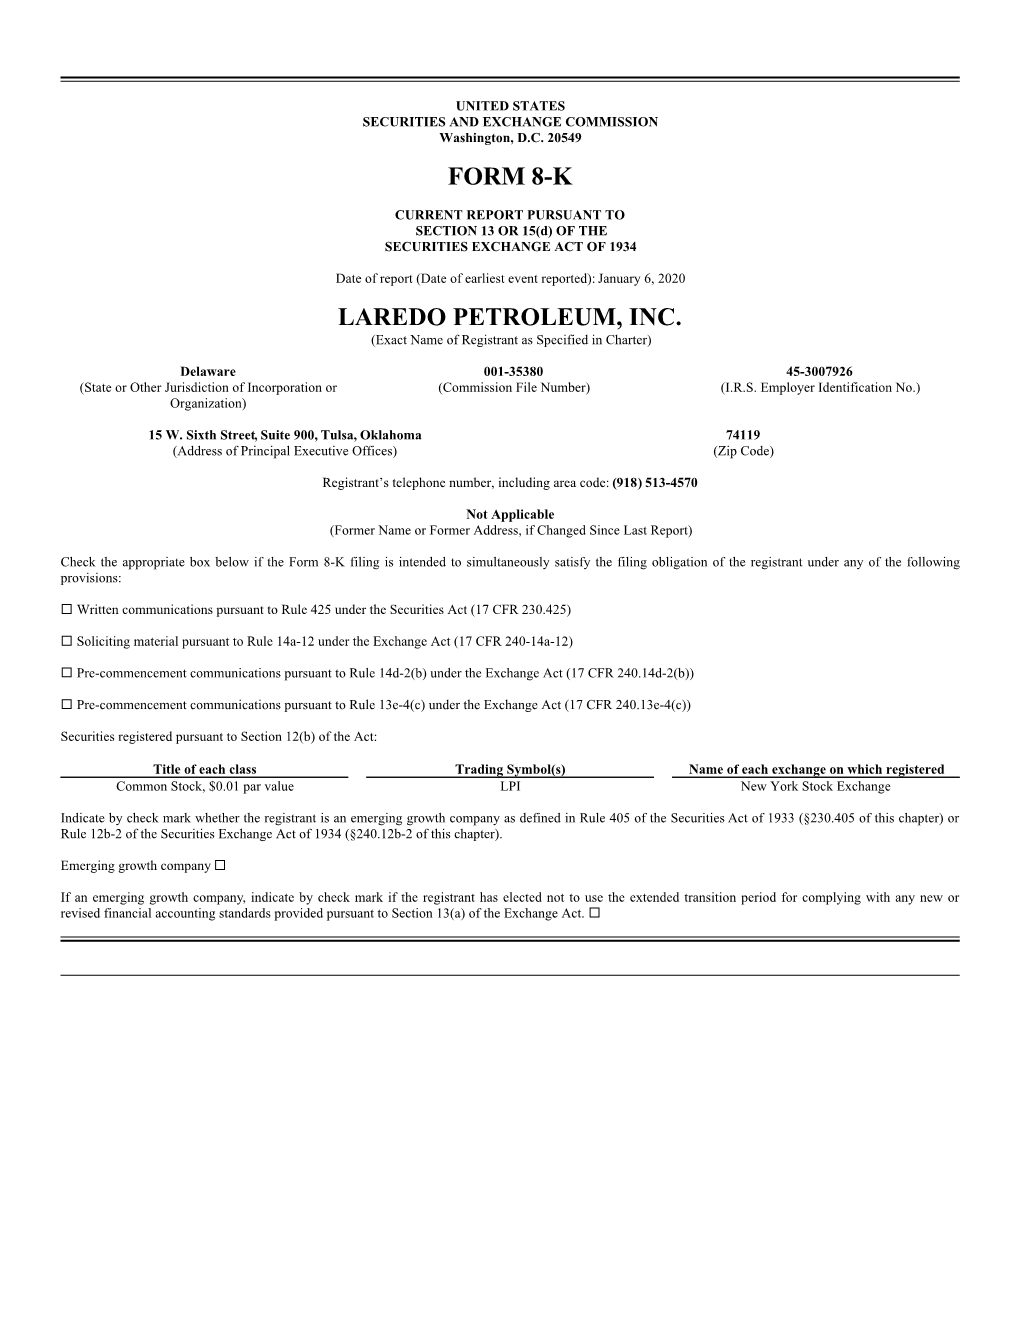 Form 8-K Laredo Petroleum, Inc